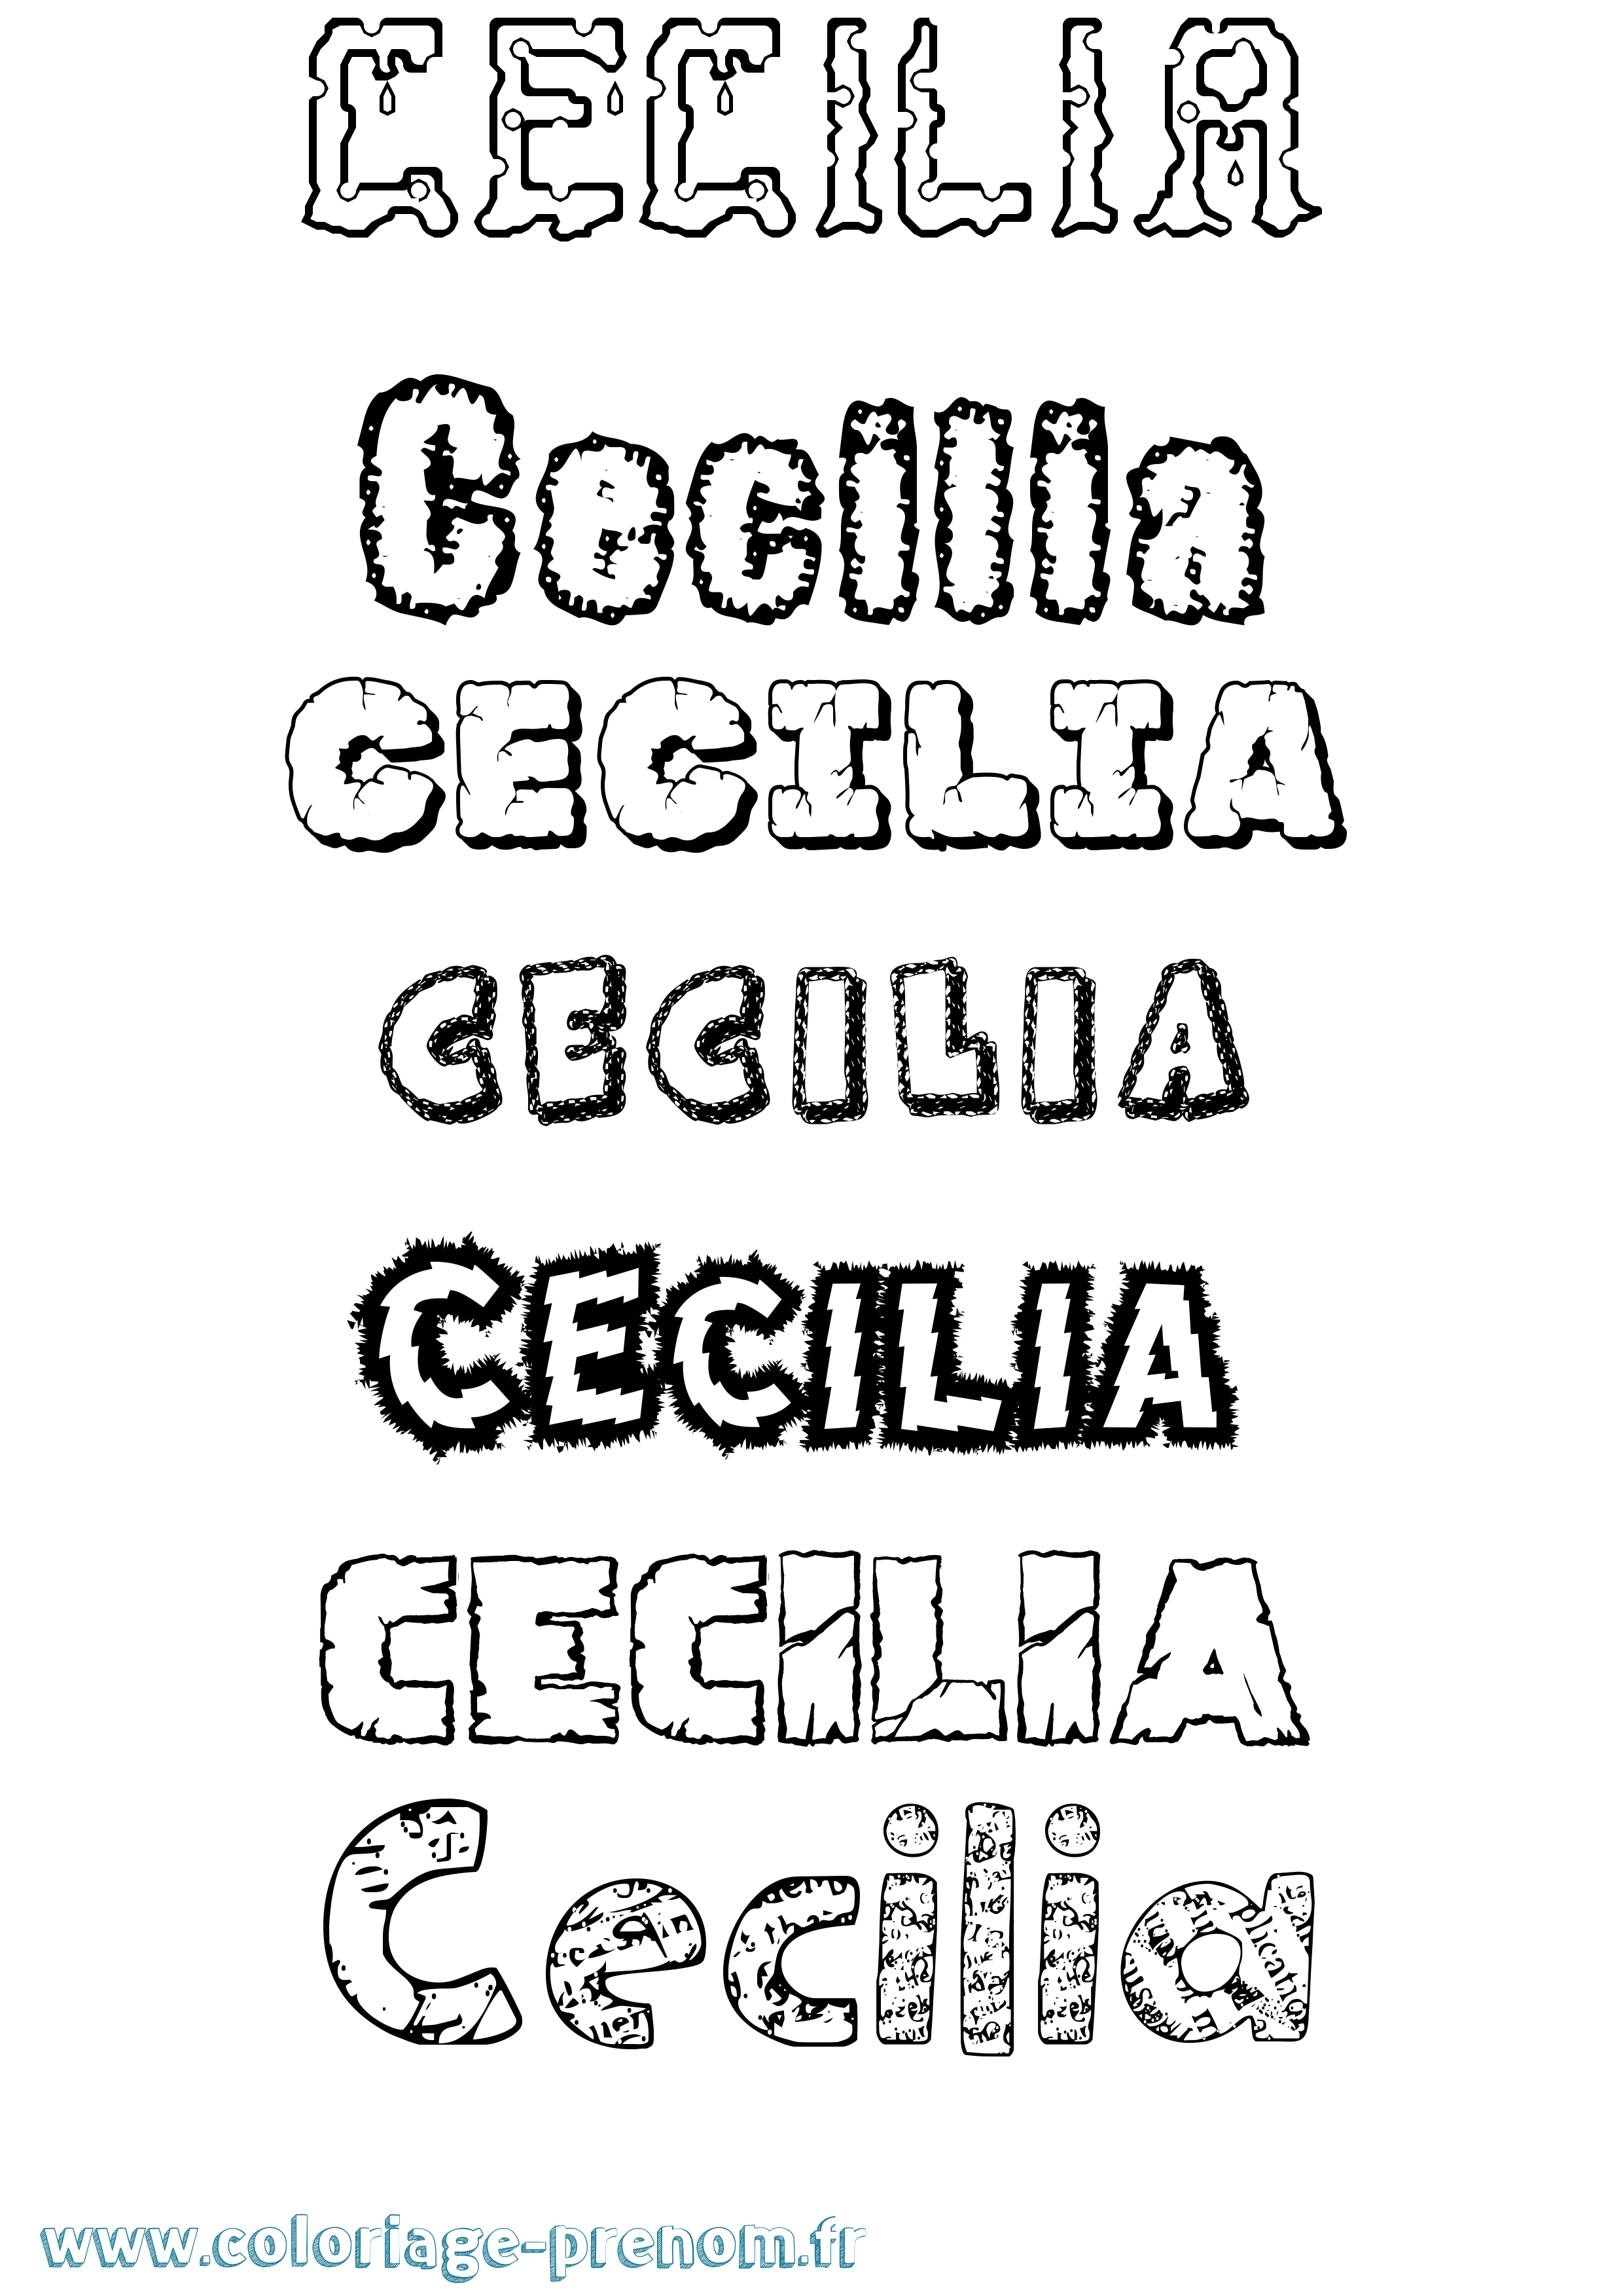 Coloriage prénom Cecilia Destructuré